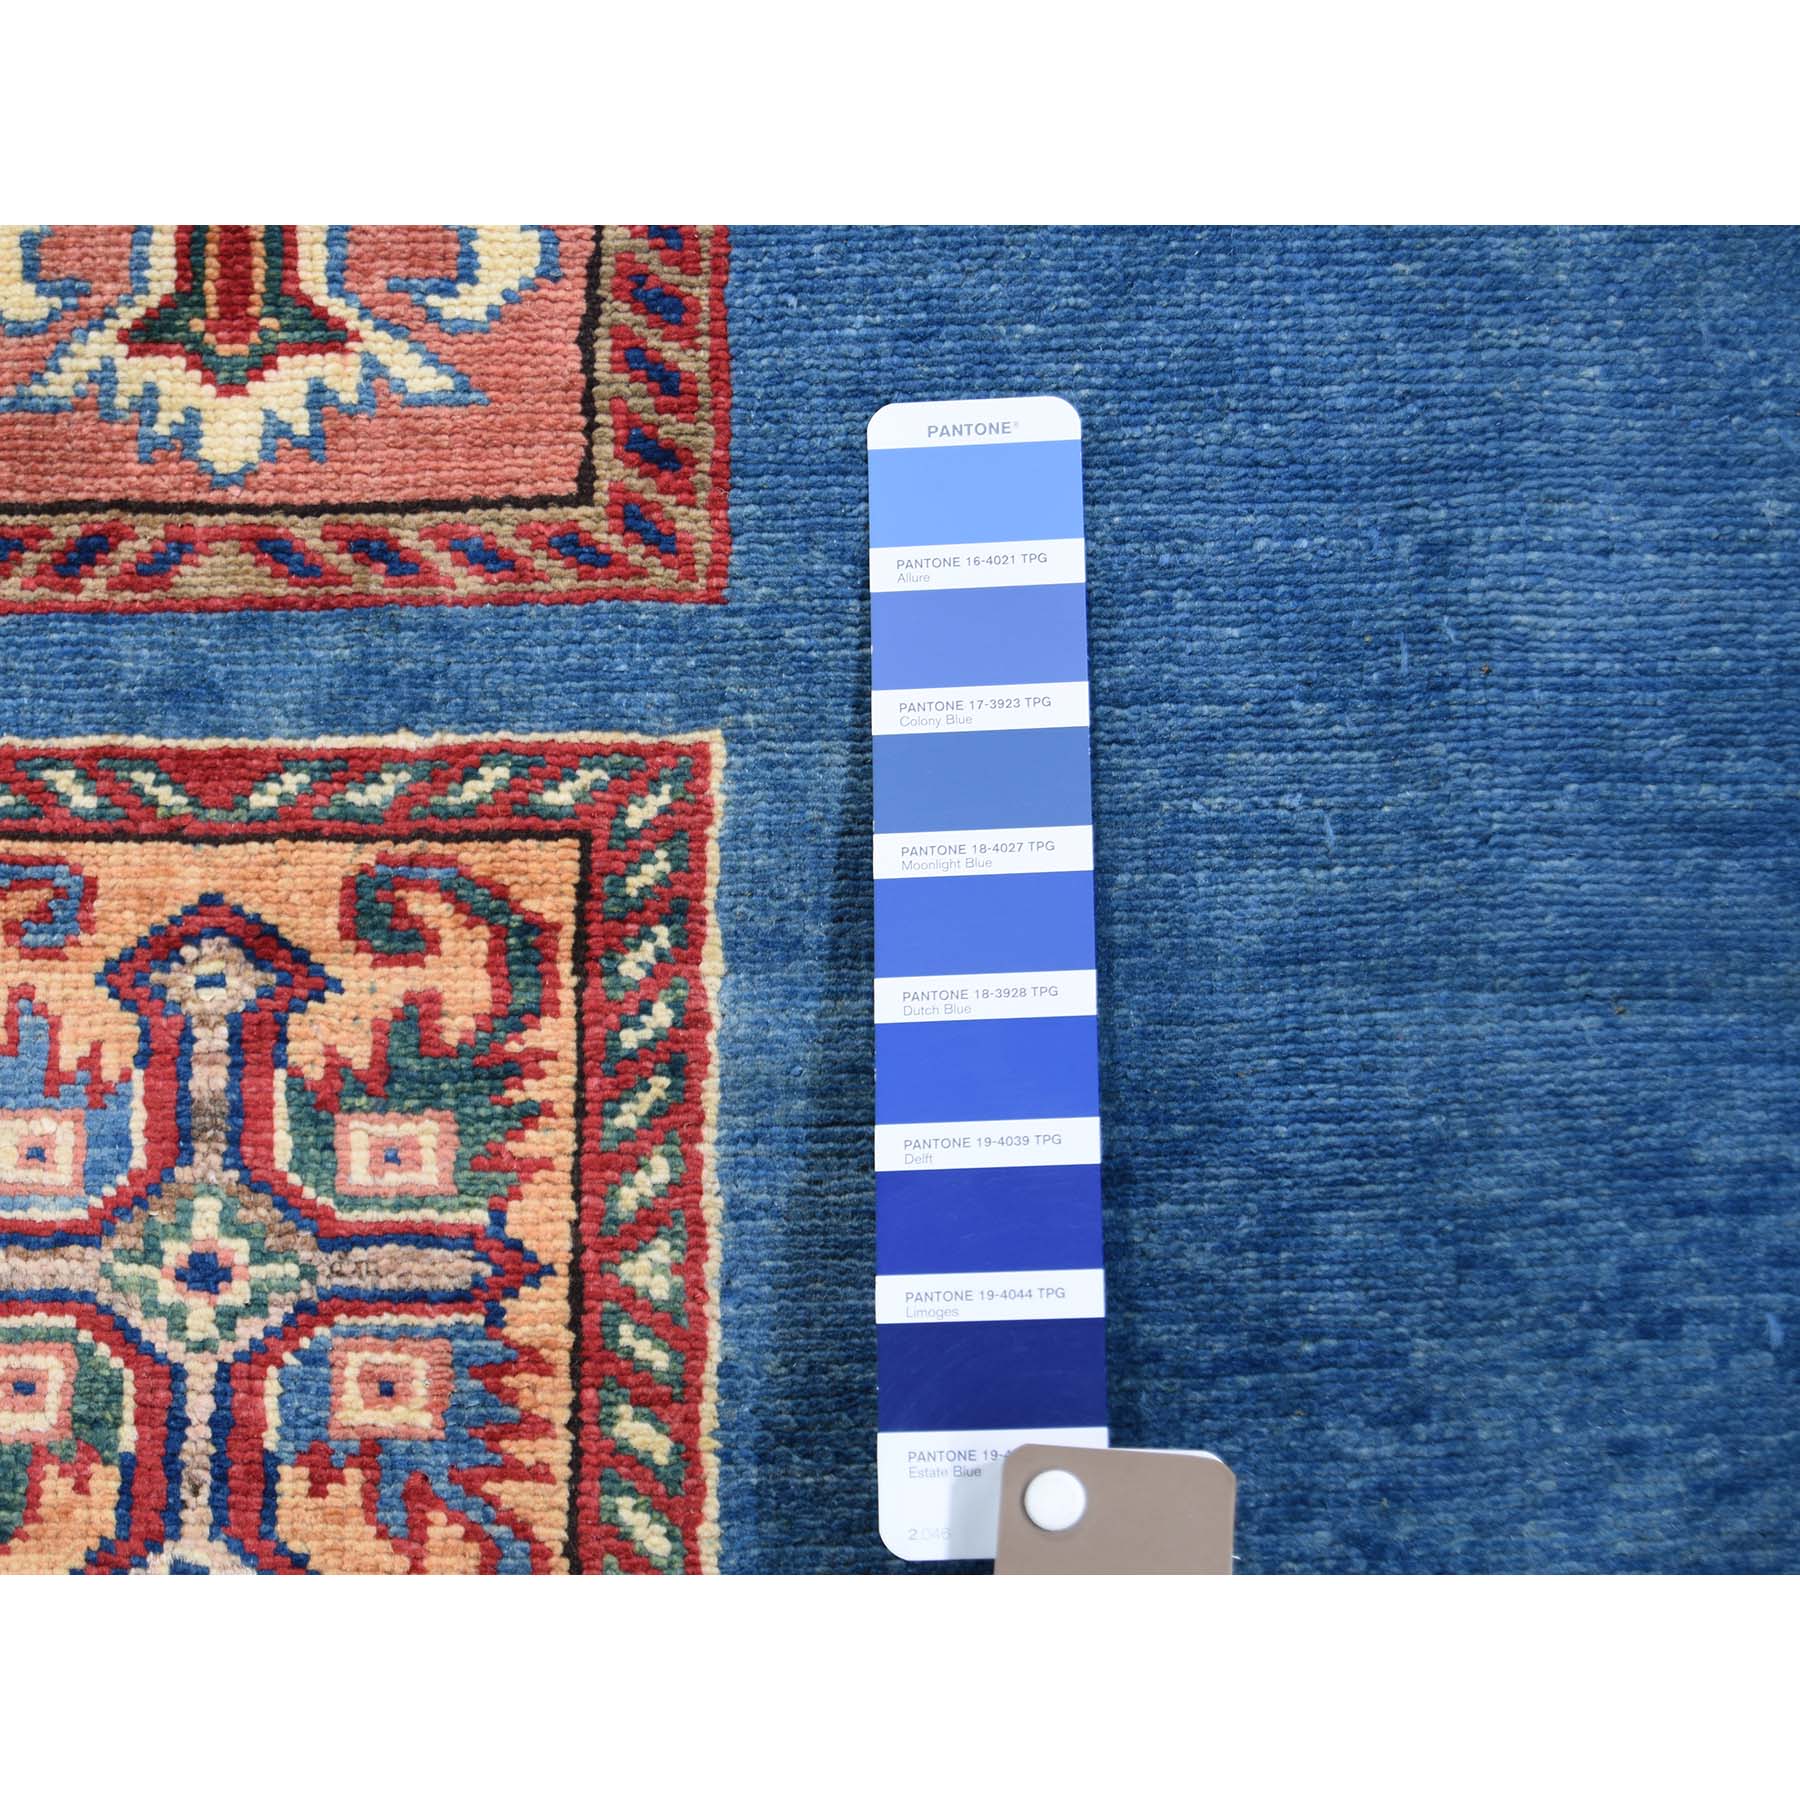 Handmade Kazak Rectangle Rug > Design# SH45449 > Size: 5'-0" x 6'-6" [ONLINE ONLY]